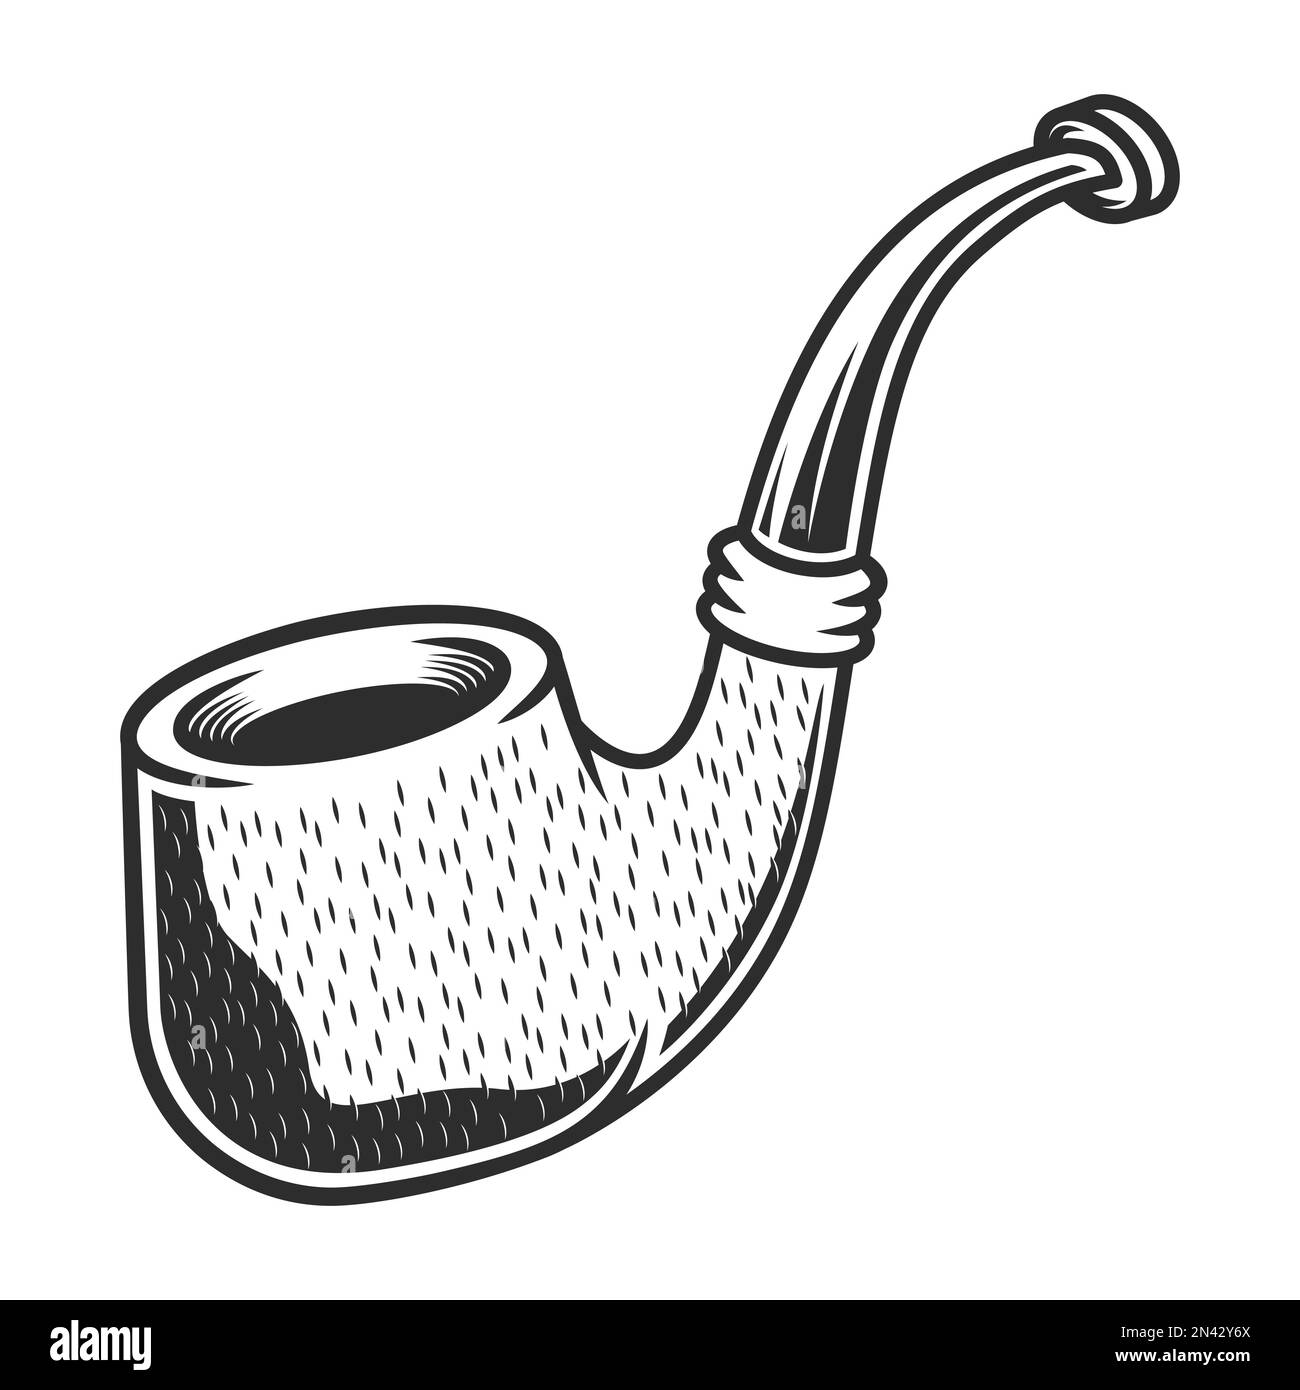 Silueta de pipa de fumar retro hipster pipa de tabaco vintage ilustración  vectorial